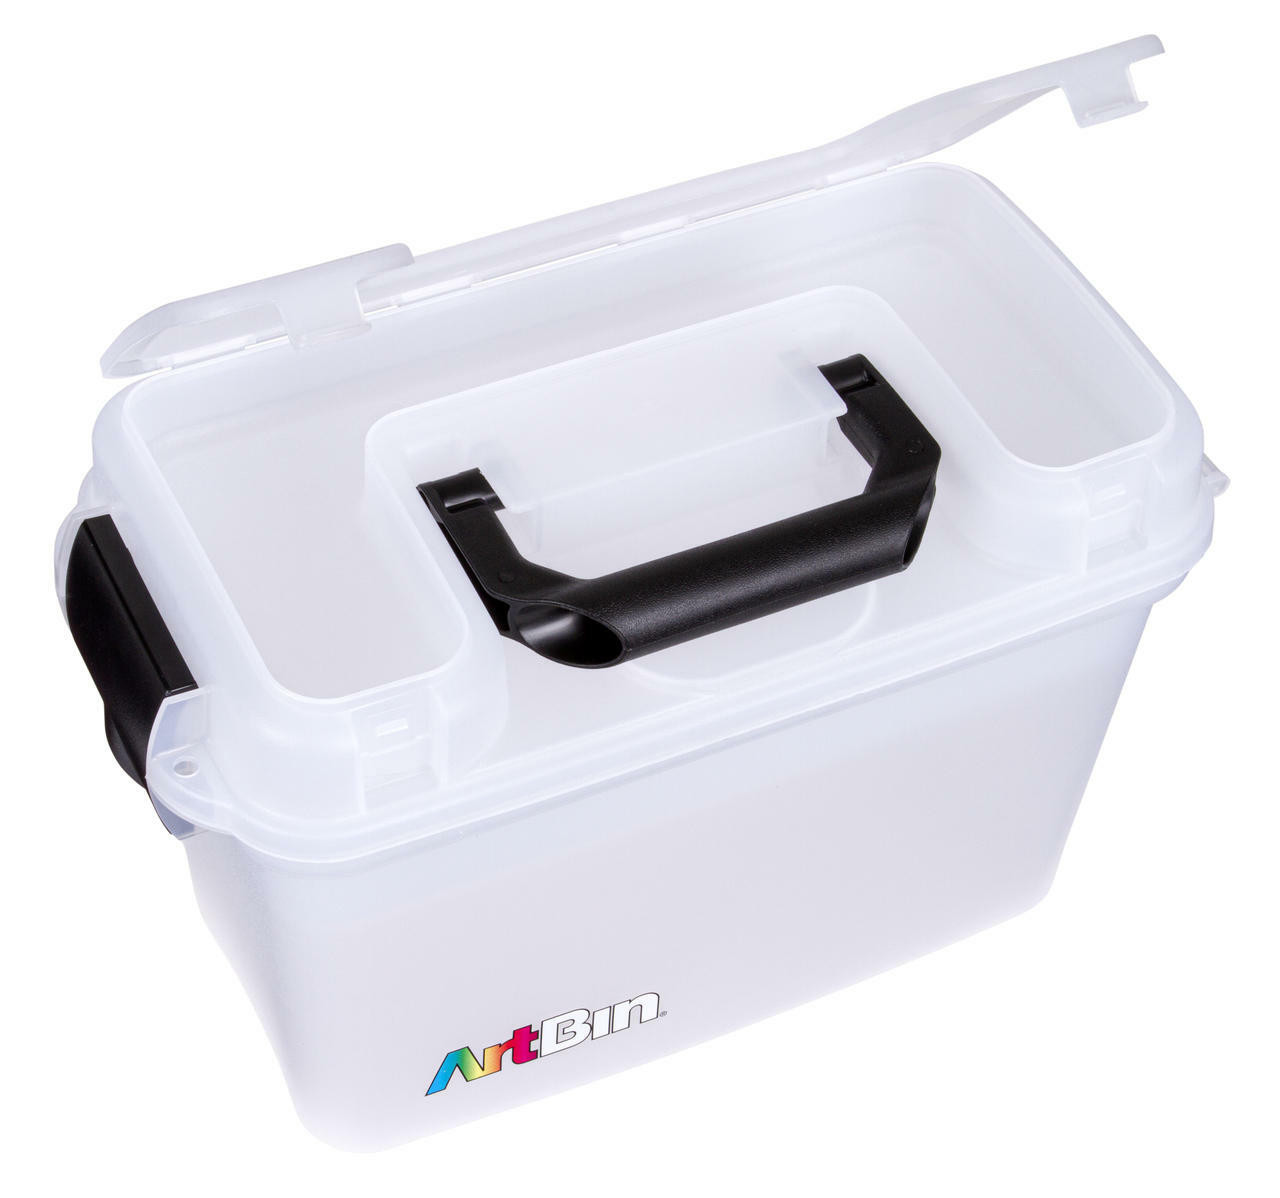 Artbin Essentials Storage Box Translucent